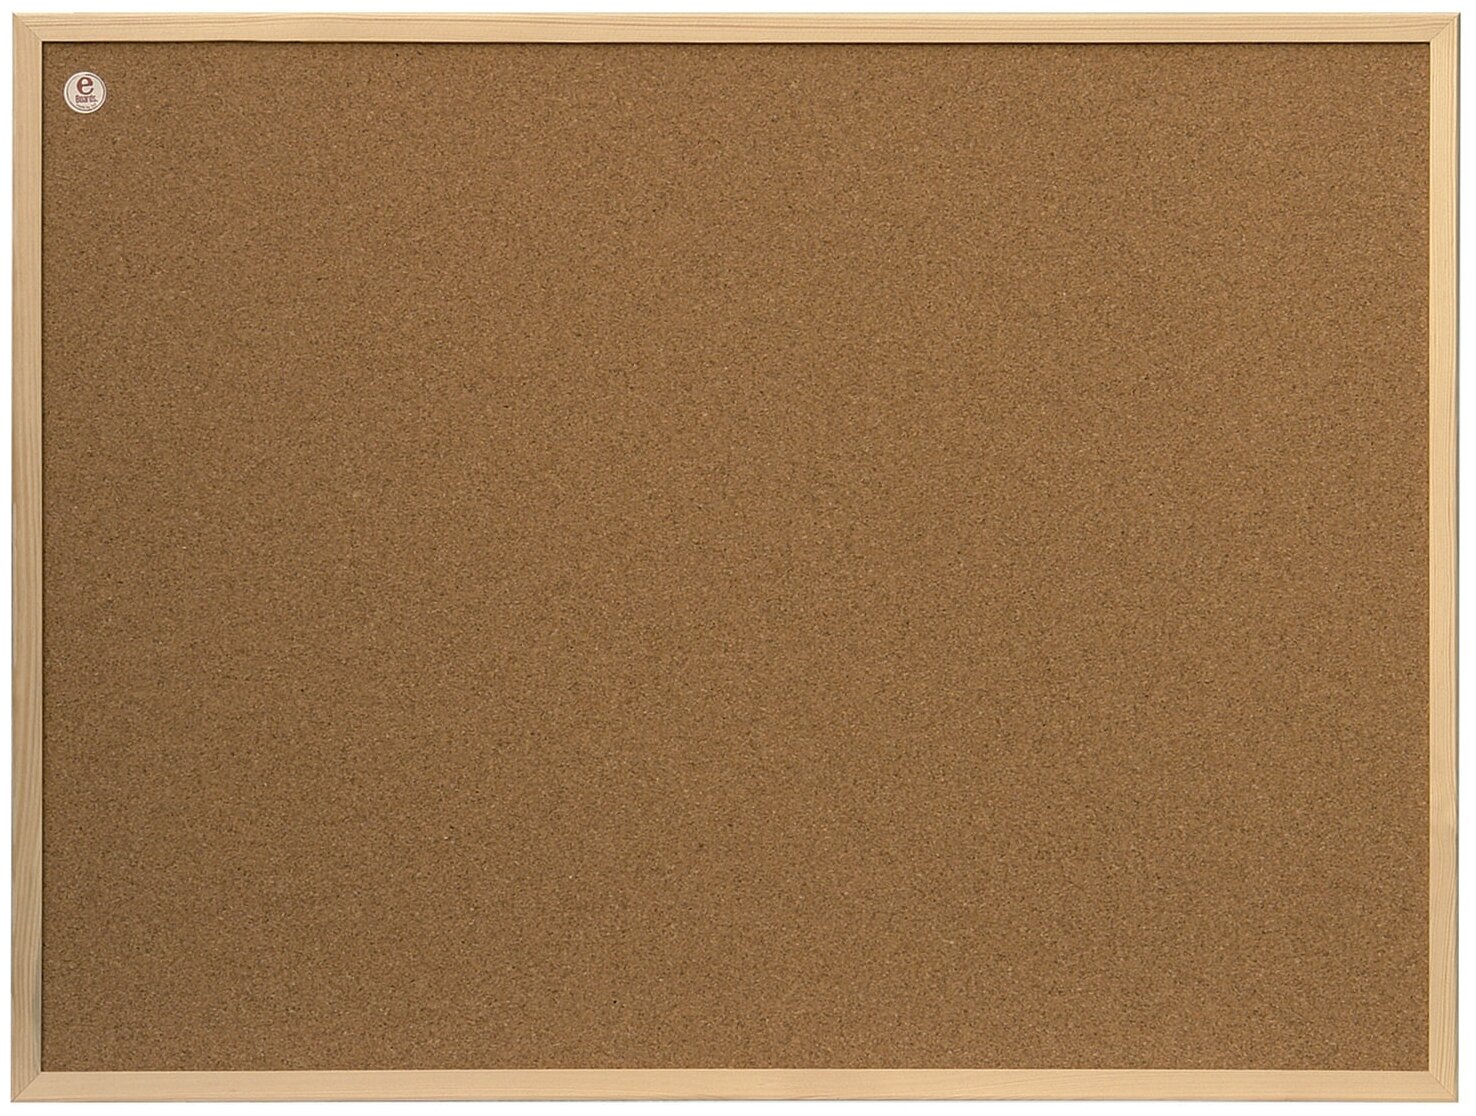 Доска пробковая для объявлений 2х3 Eco, 80x60 см, деревянная рамка